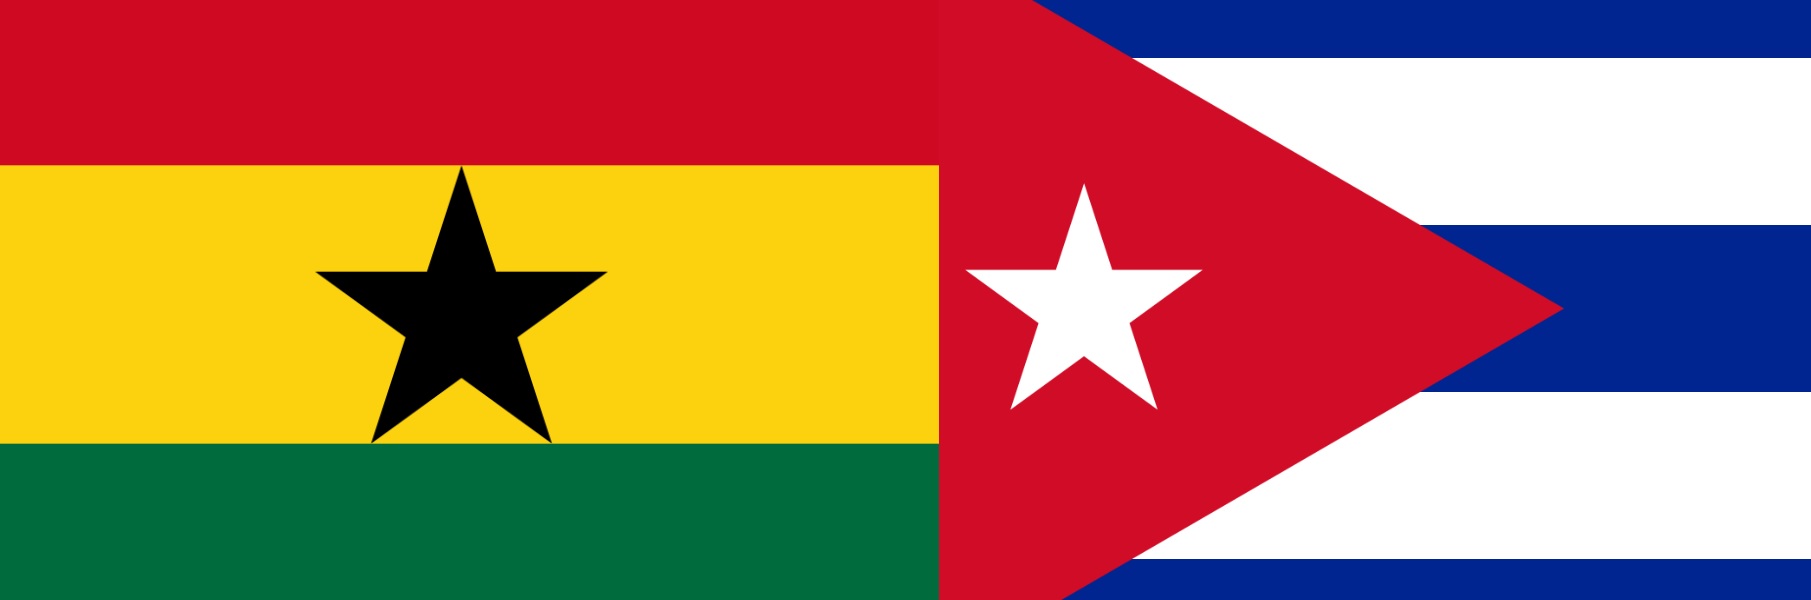 Ghana and Cuba team up on ‘Year of Return 2019’